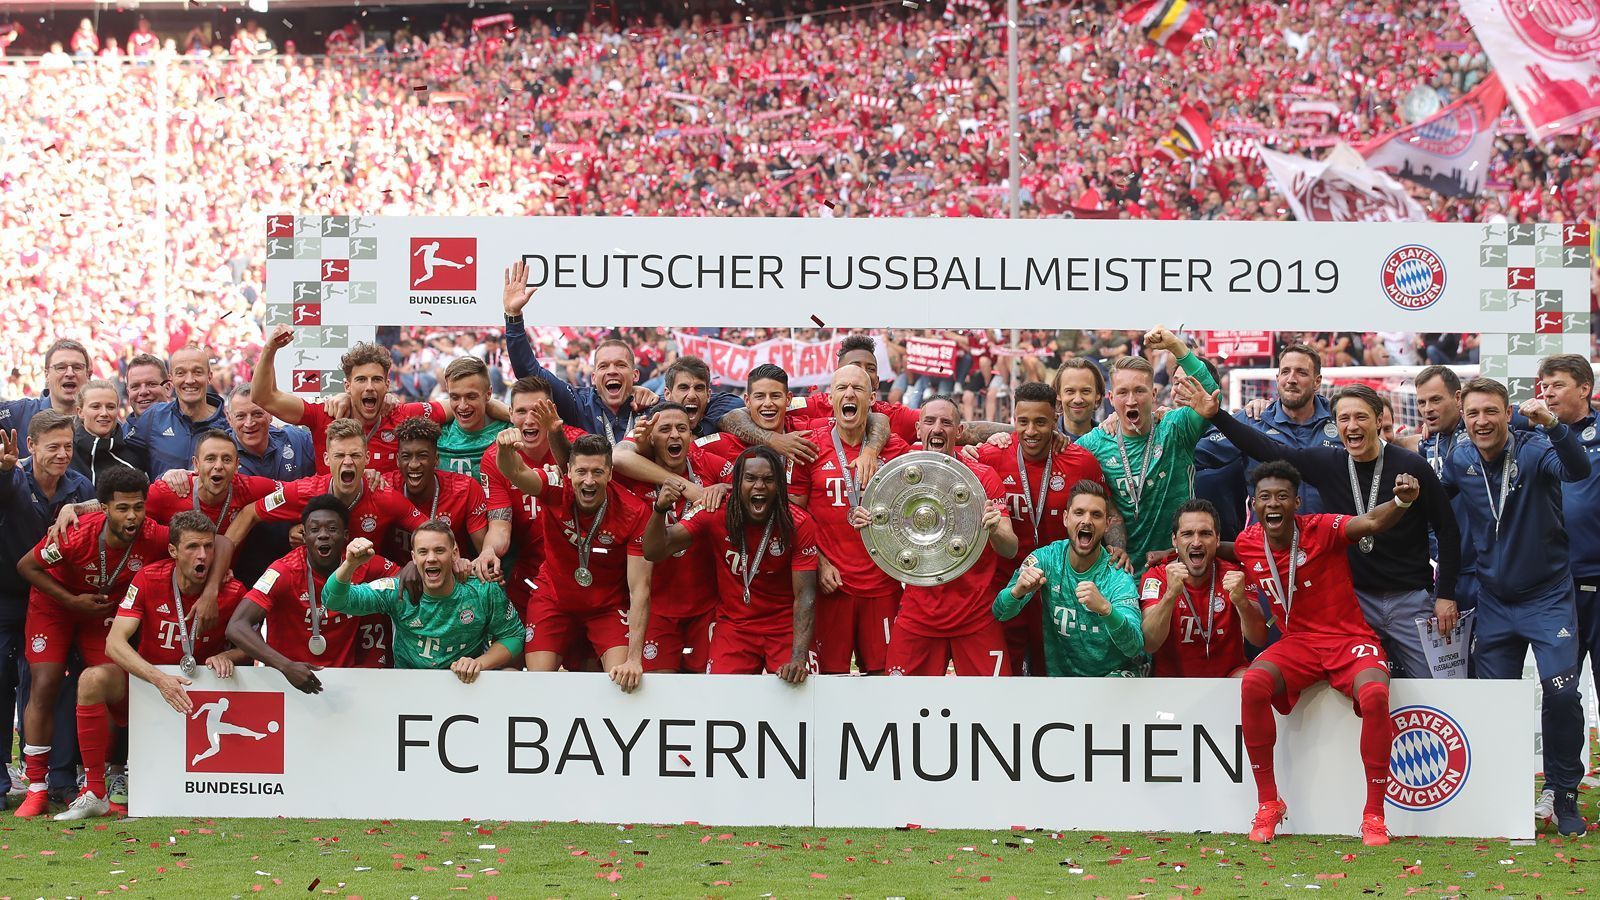 
                <strong>Topf 1: FC Bayern München</strong><br>
                Meister in DeutschlandGrößter CL-Erfolg: Sieger 1974, 1975, 1976, 2001, 2013
              